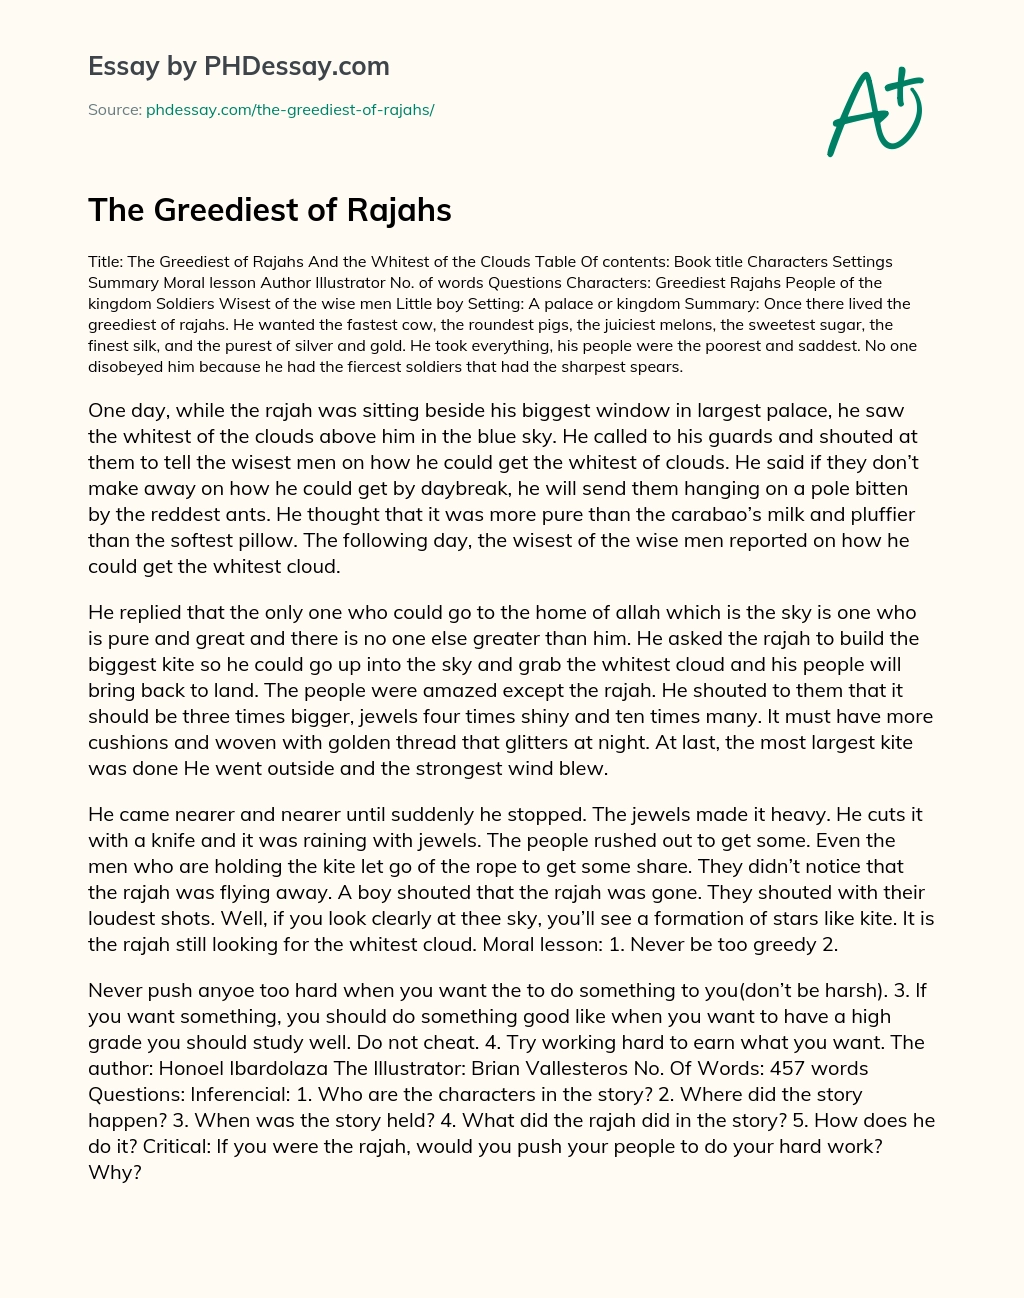 The Greediest of Rajahs essay